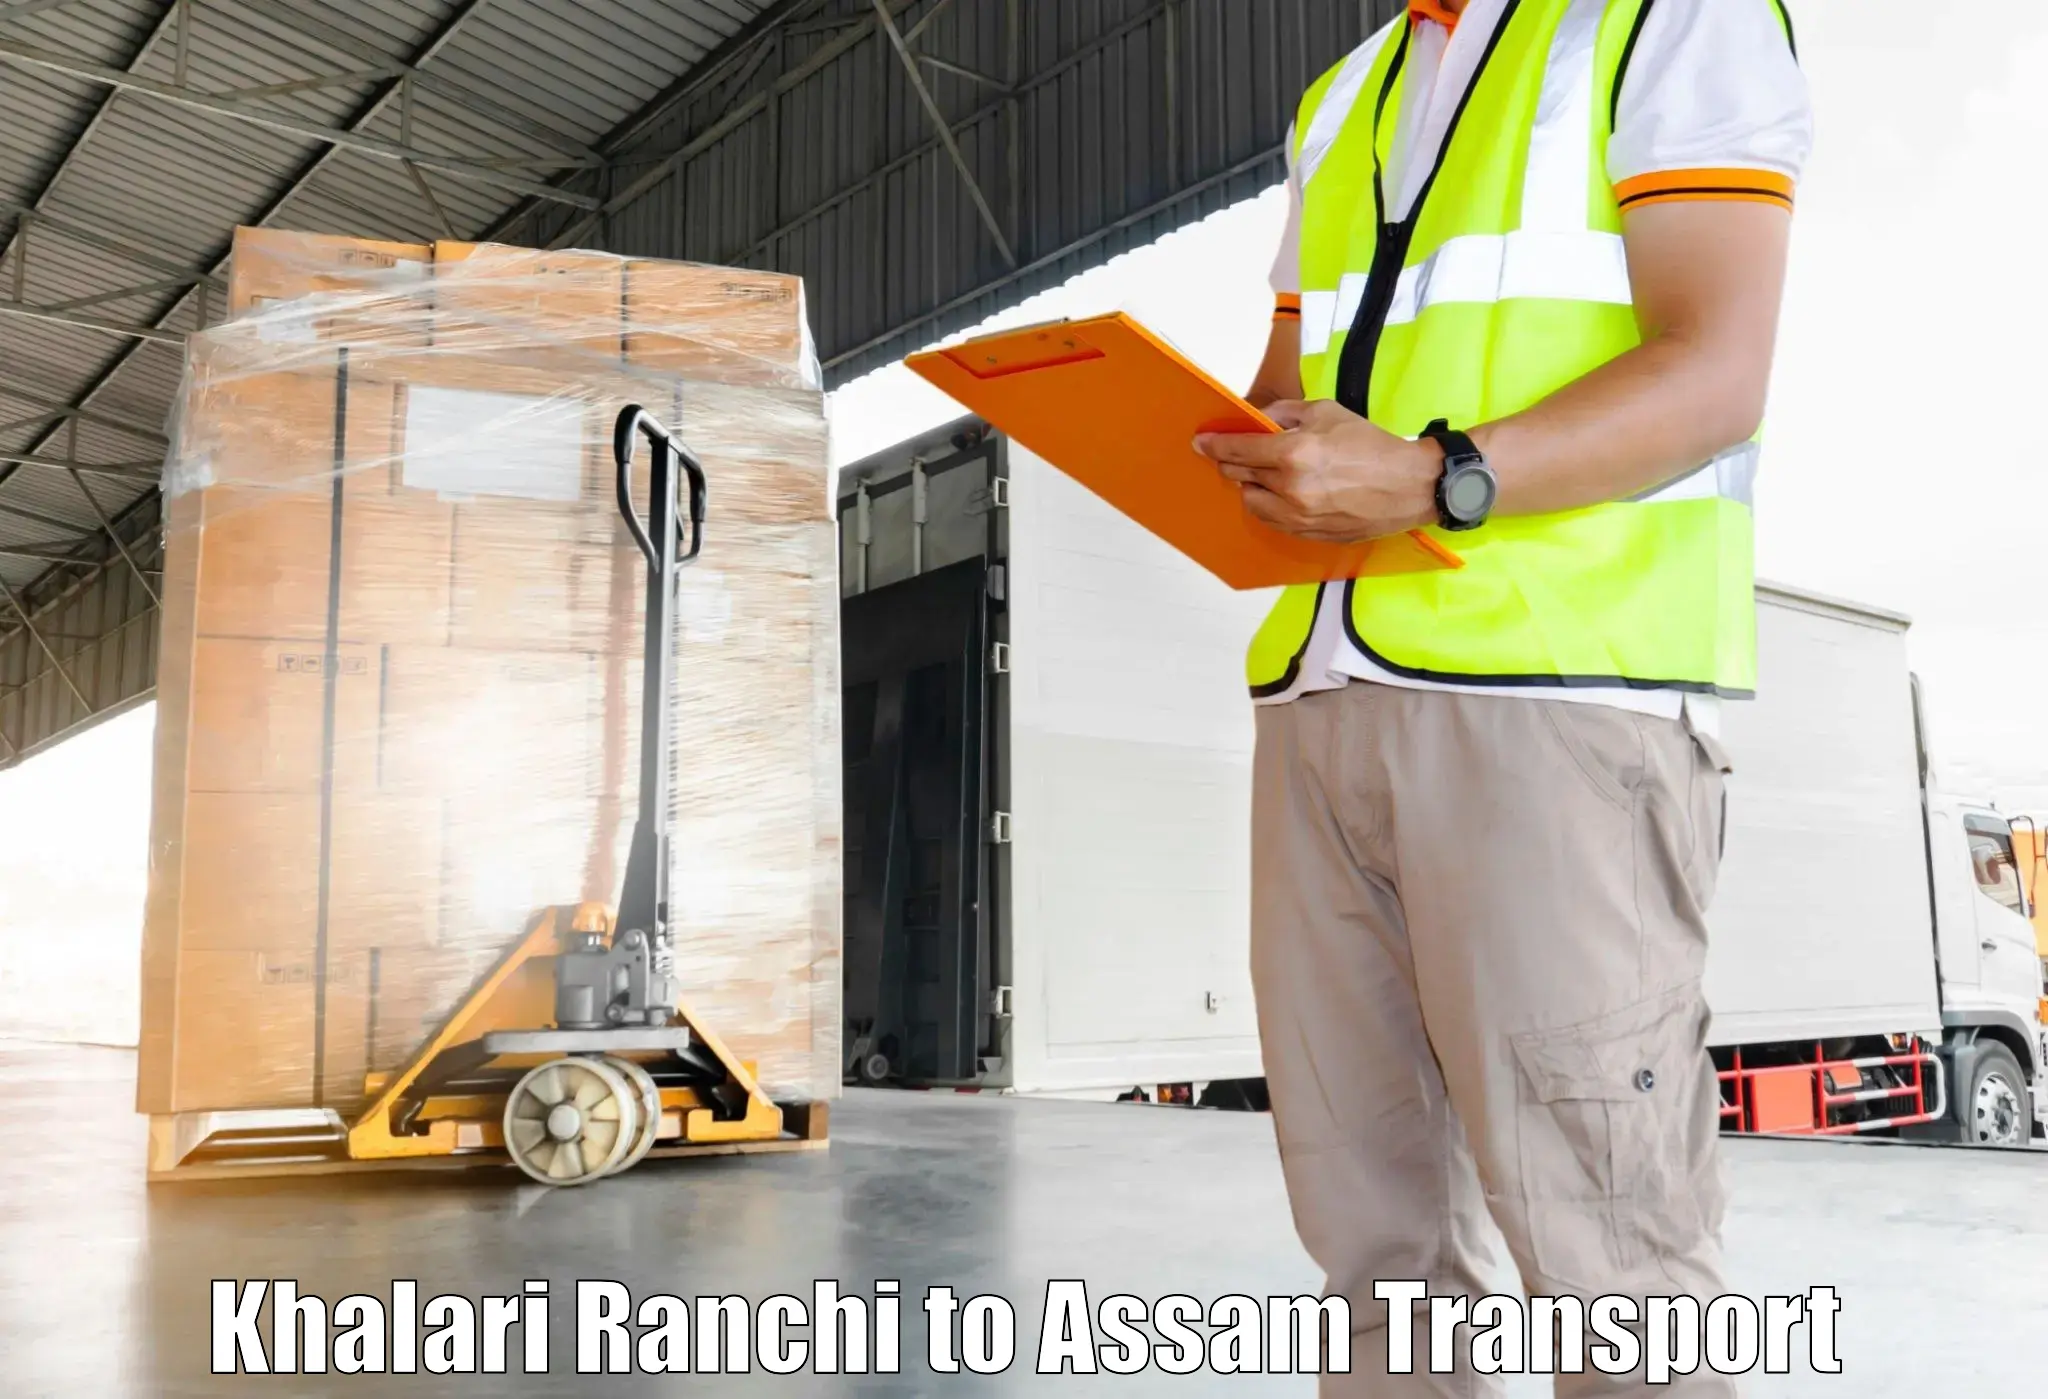 Commercial transport service Khalari Ranchi to Assam